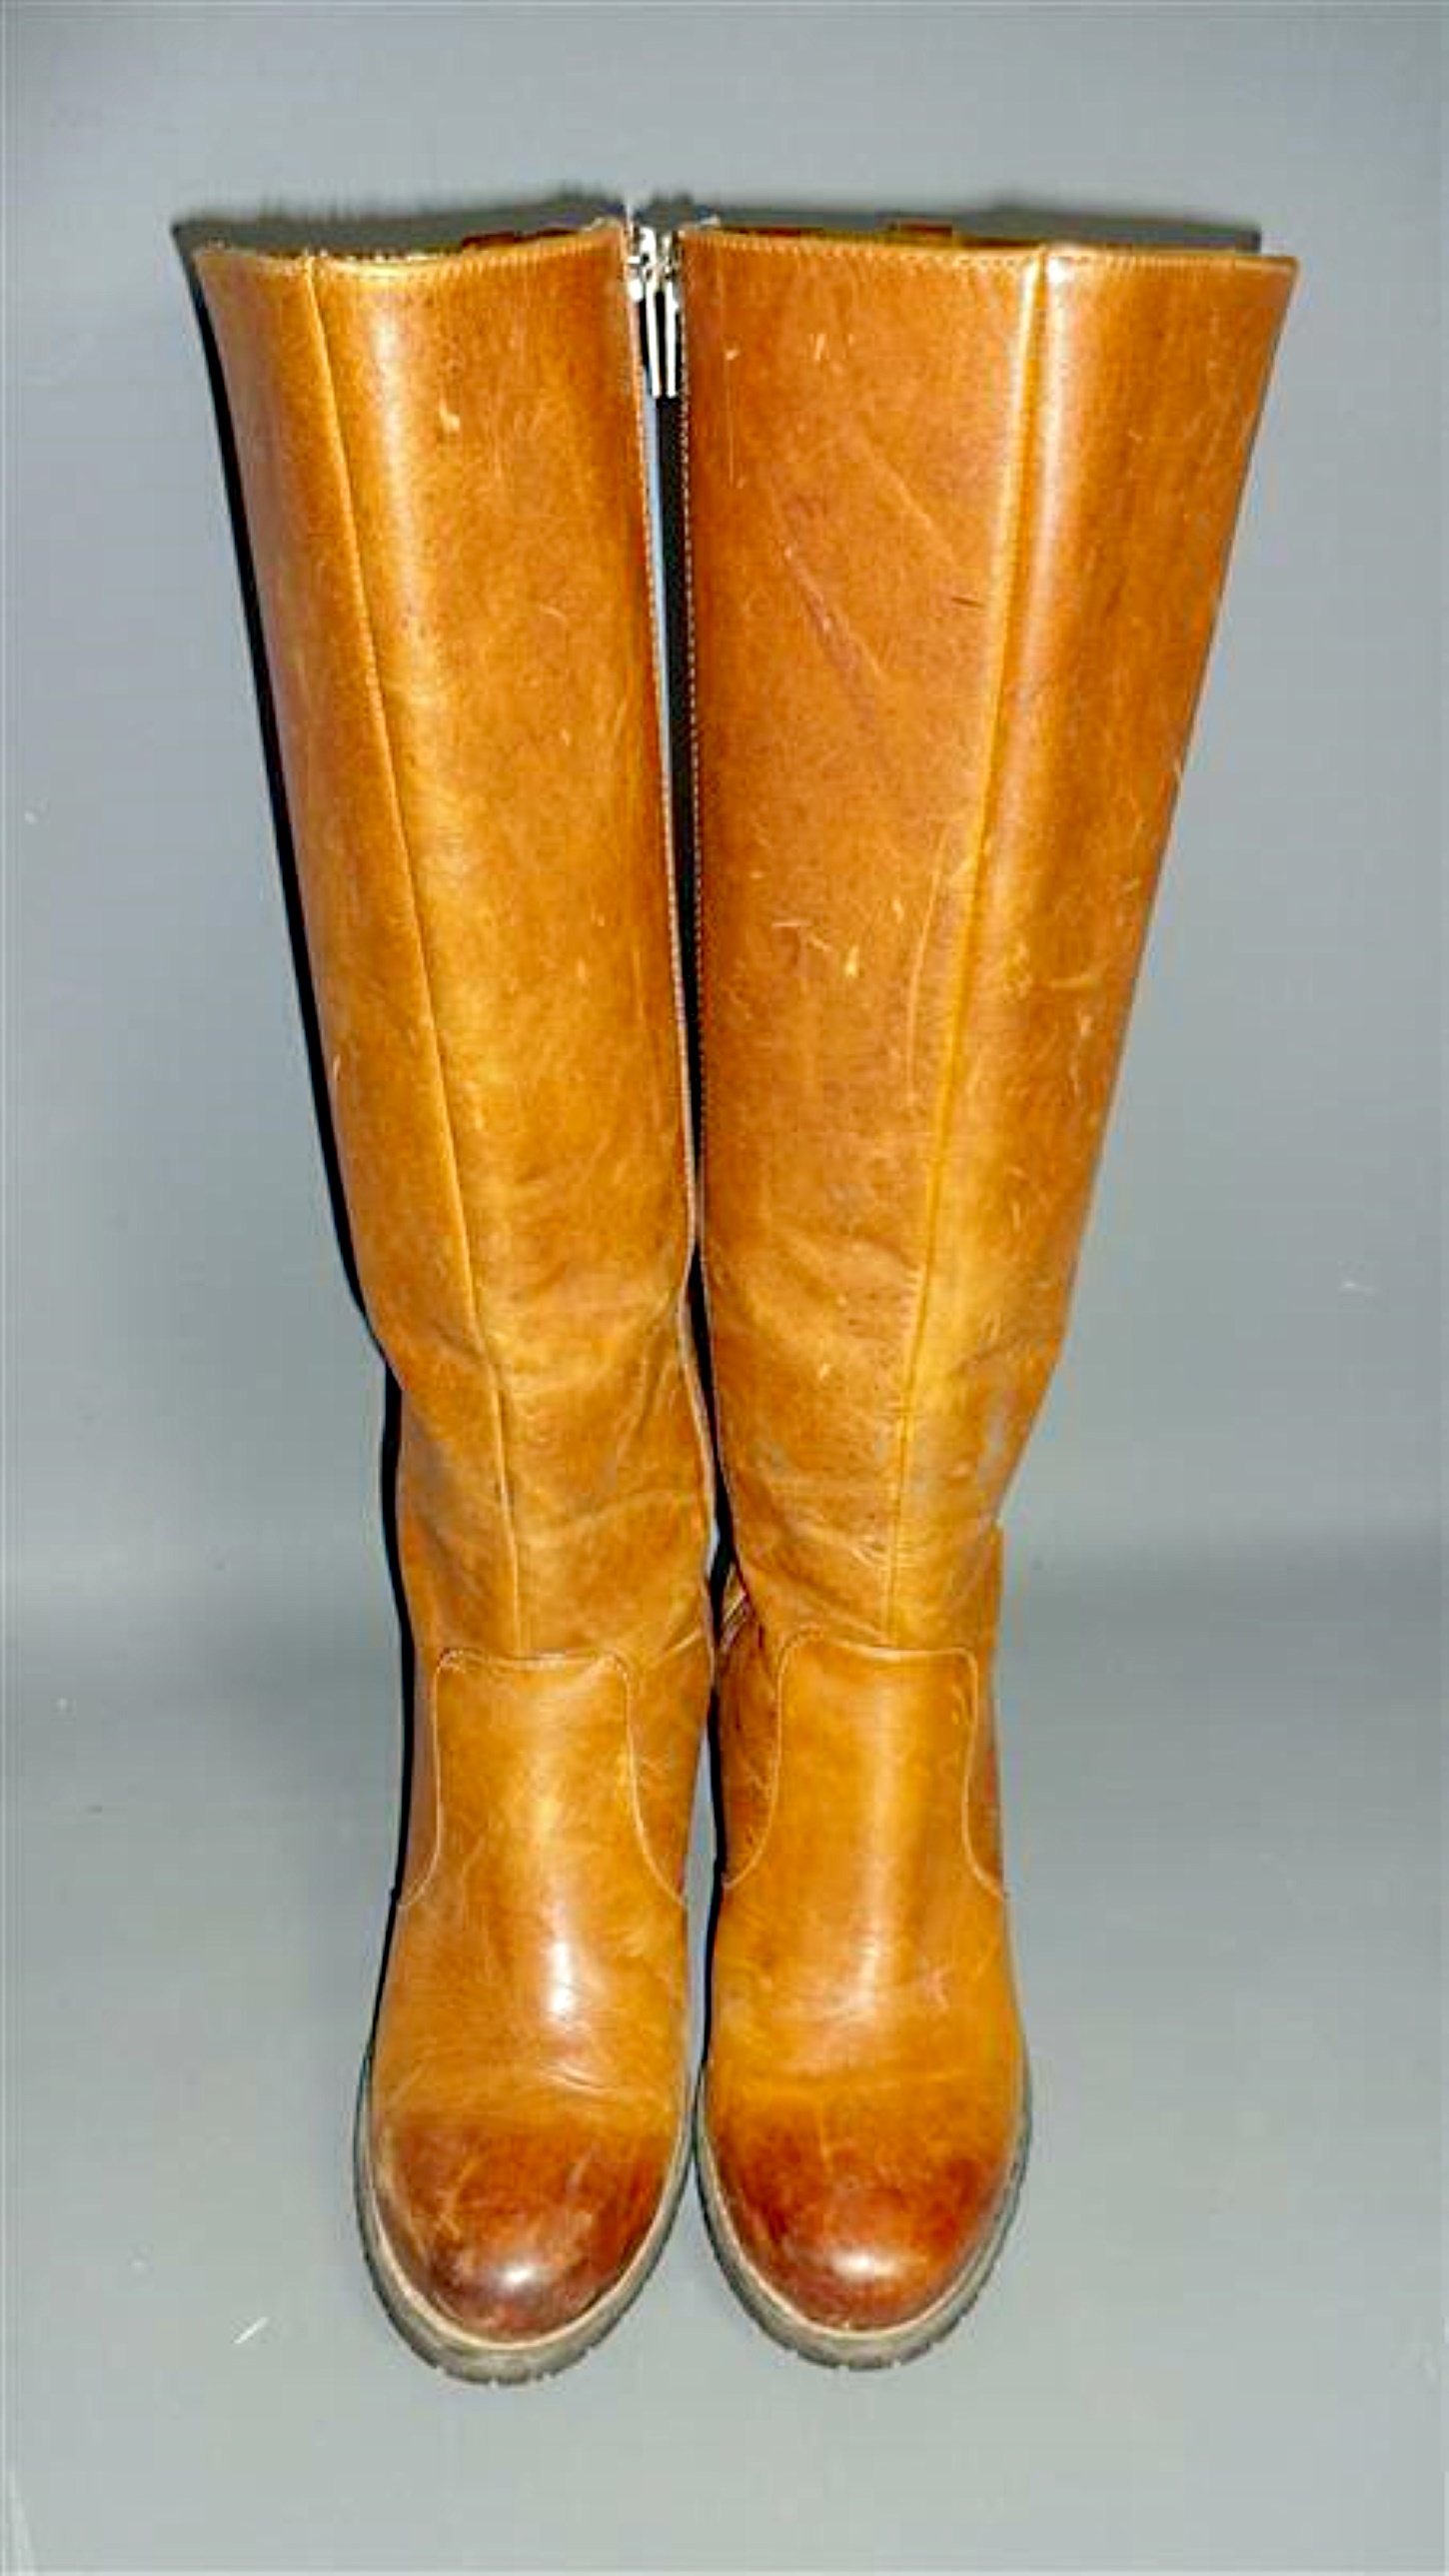 Peggy Blumquist's Knee-High Winter Clarks Boots | Fandom